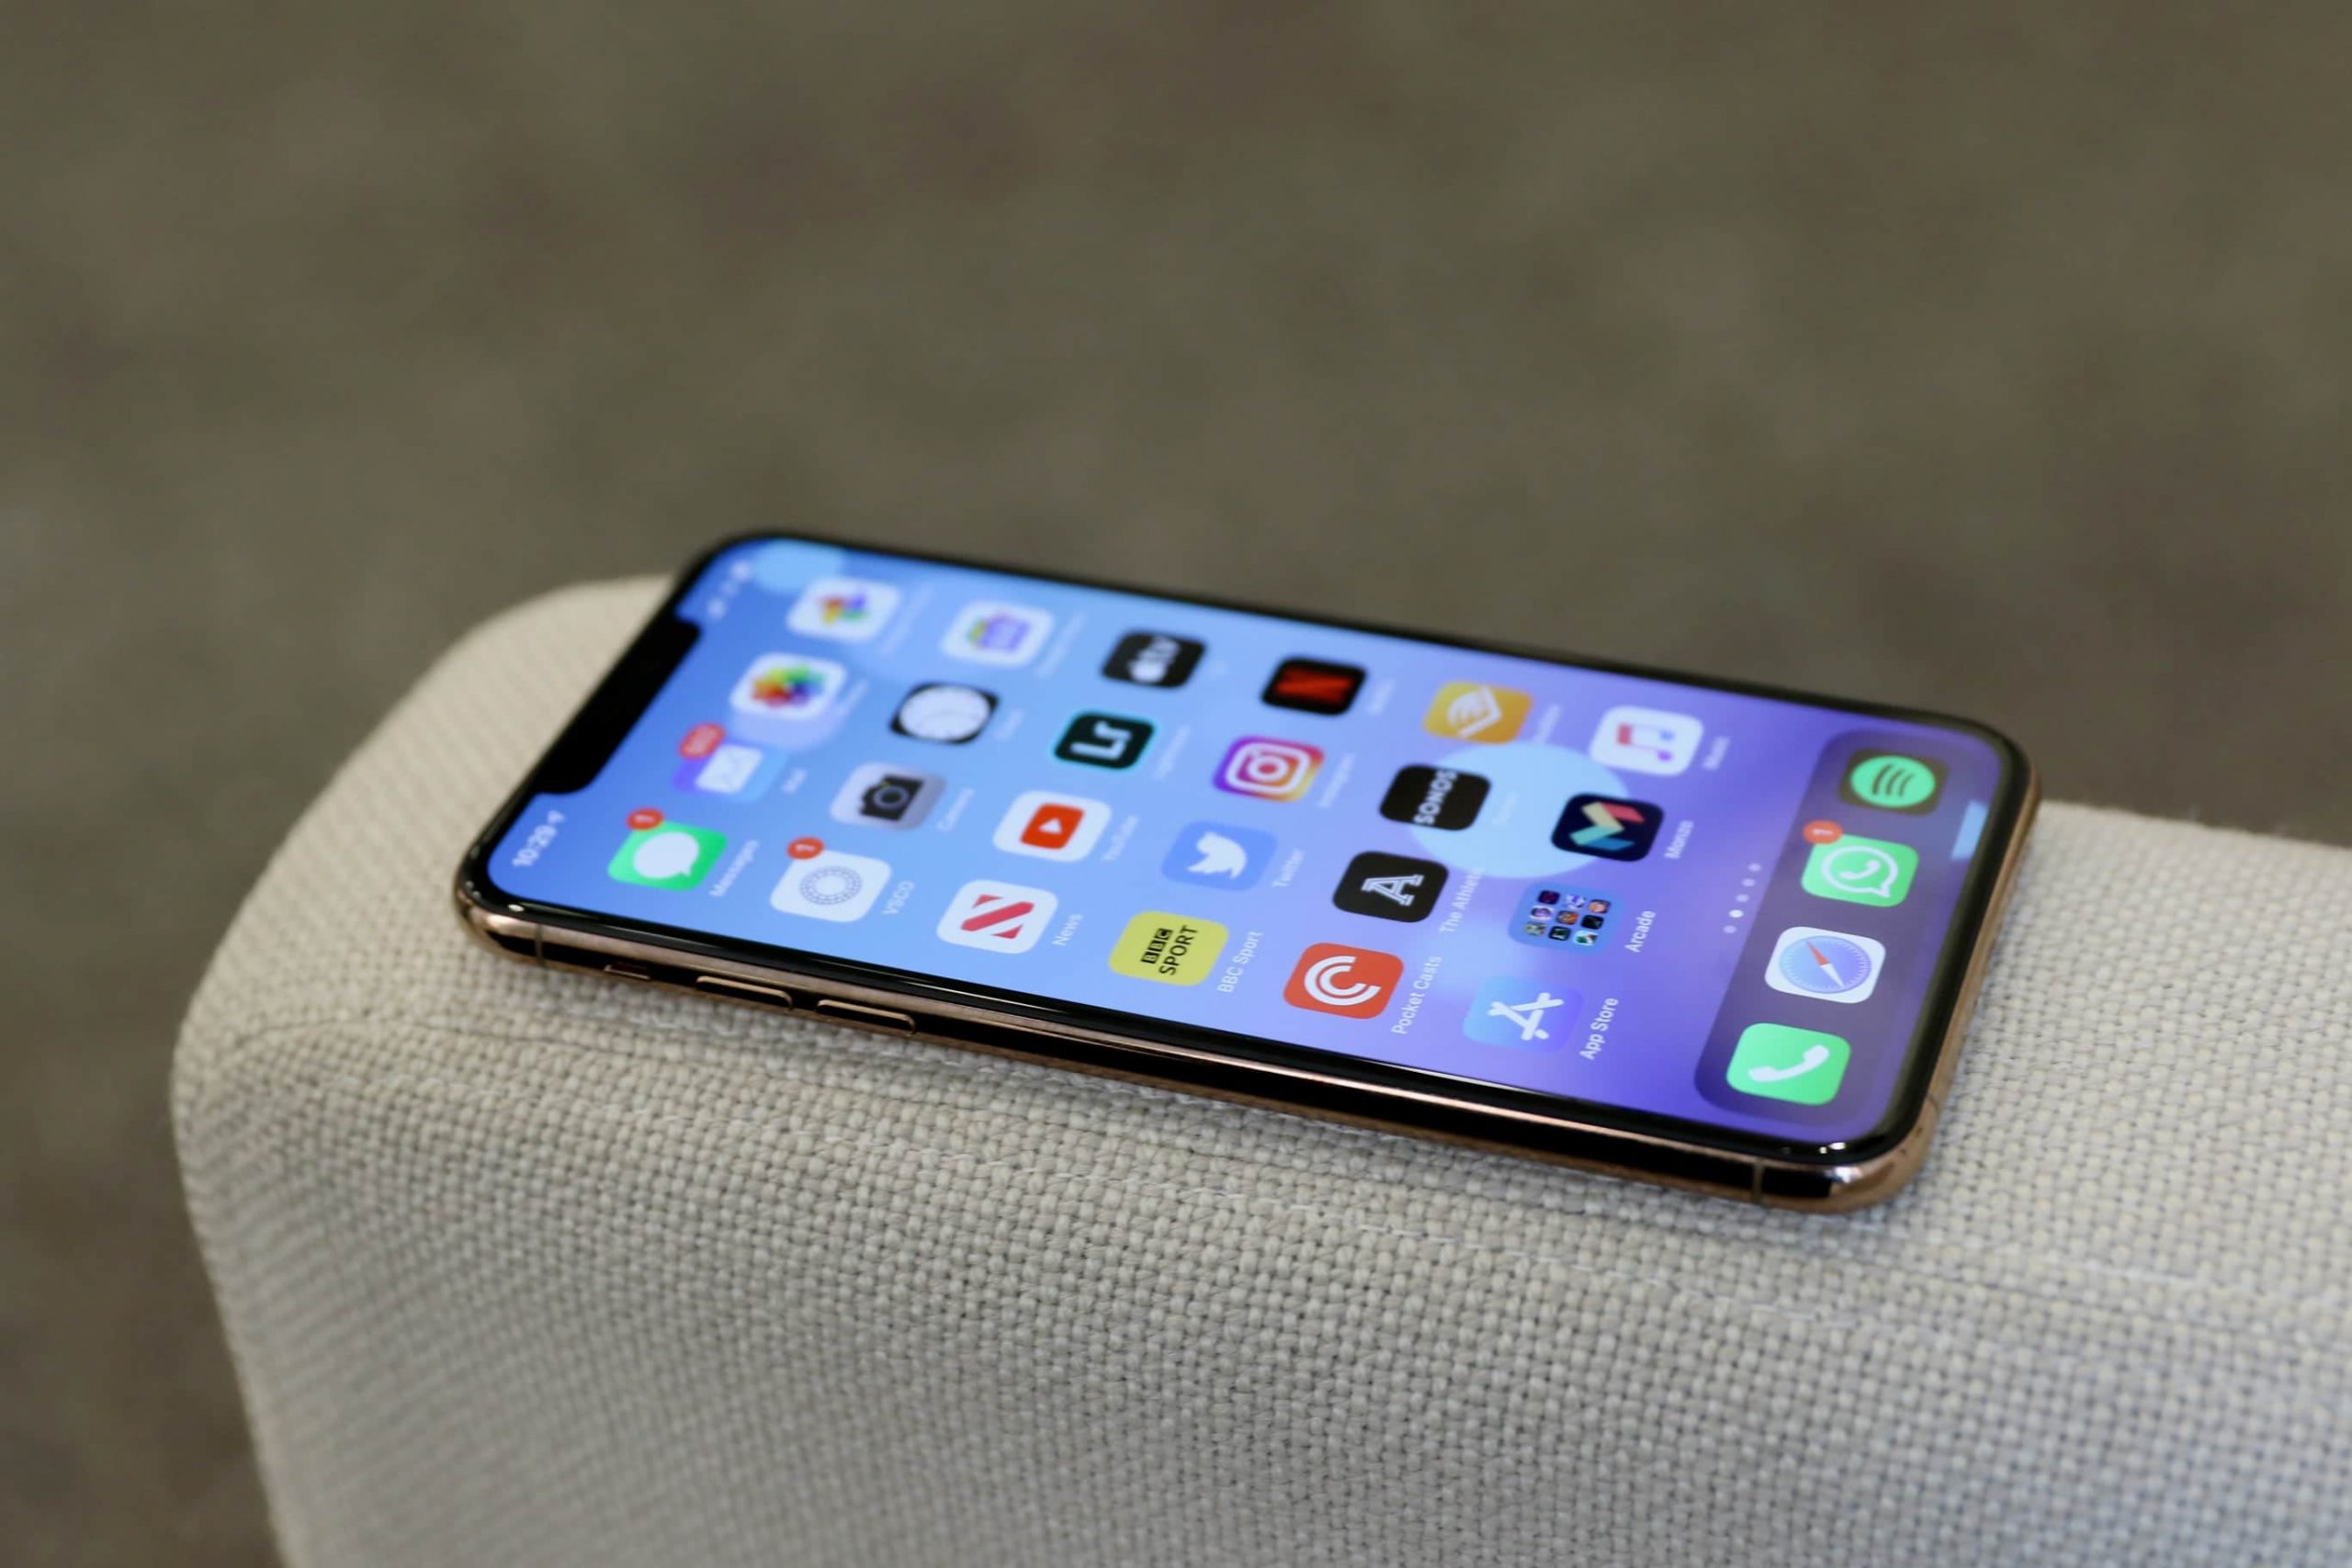 Apple iPhone 11 Pro Max Price in Nigeria, Specs, and Review. - SG Nigeria